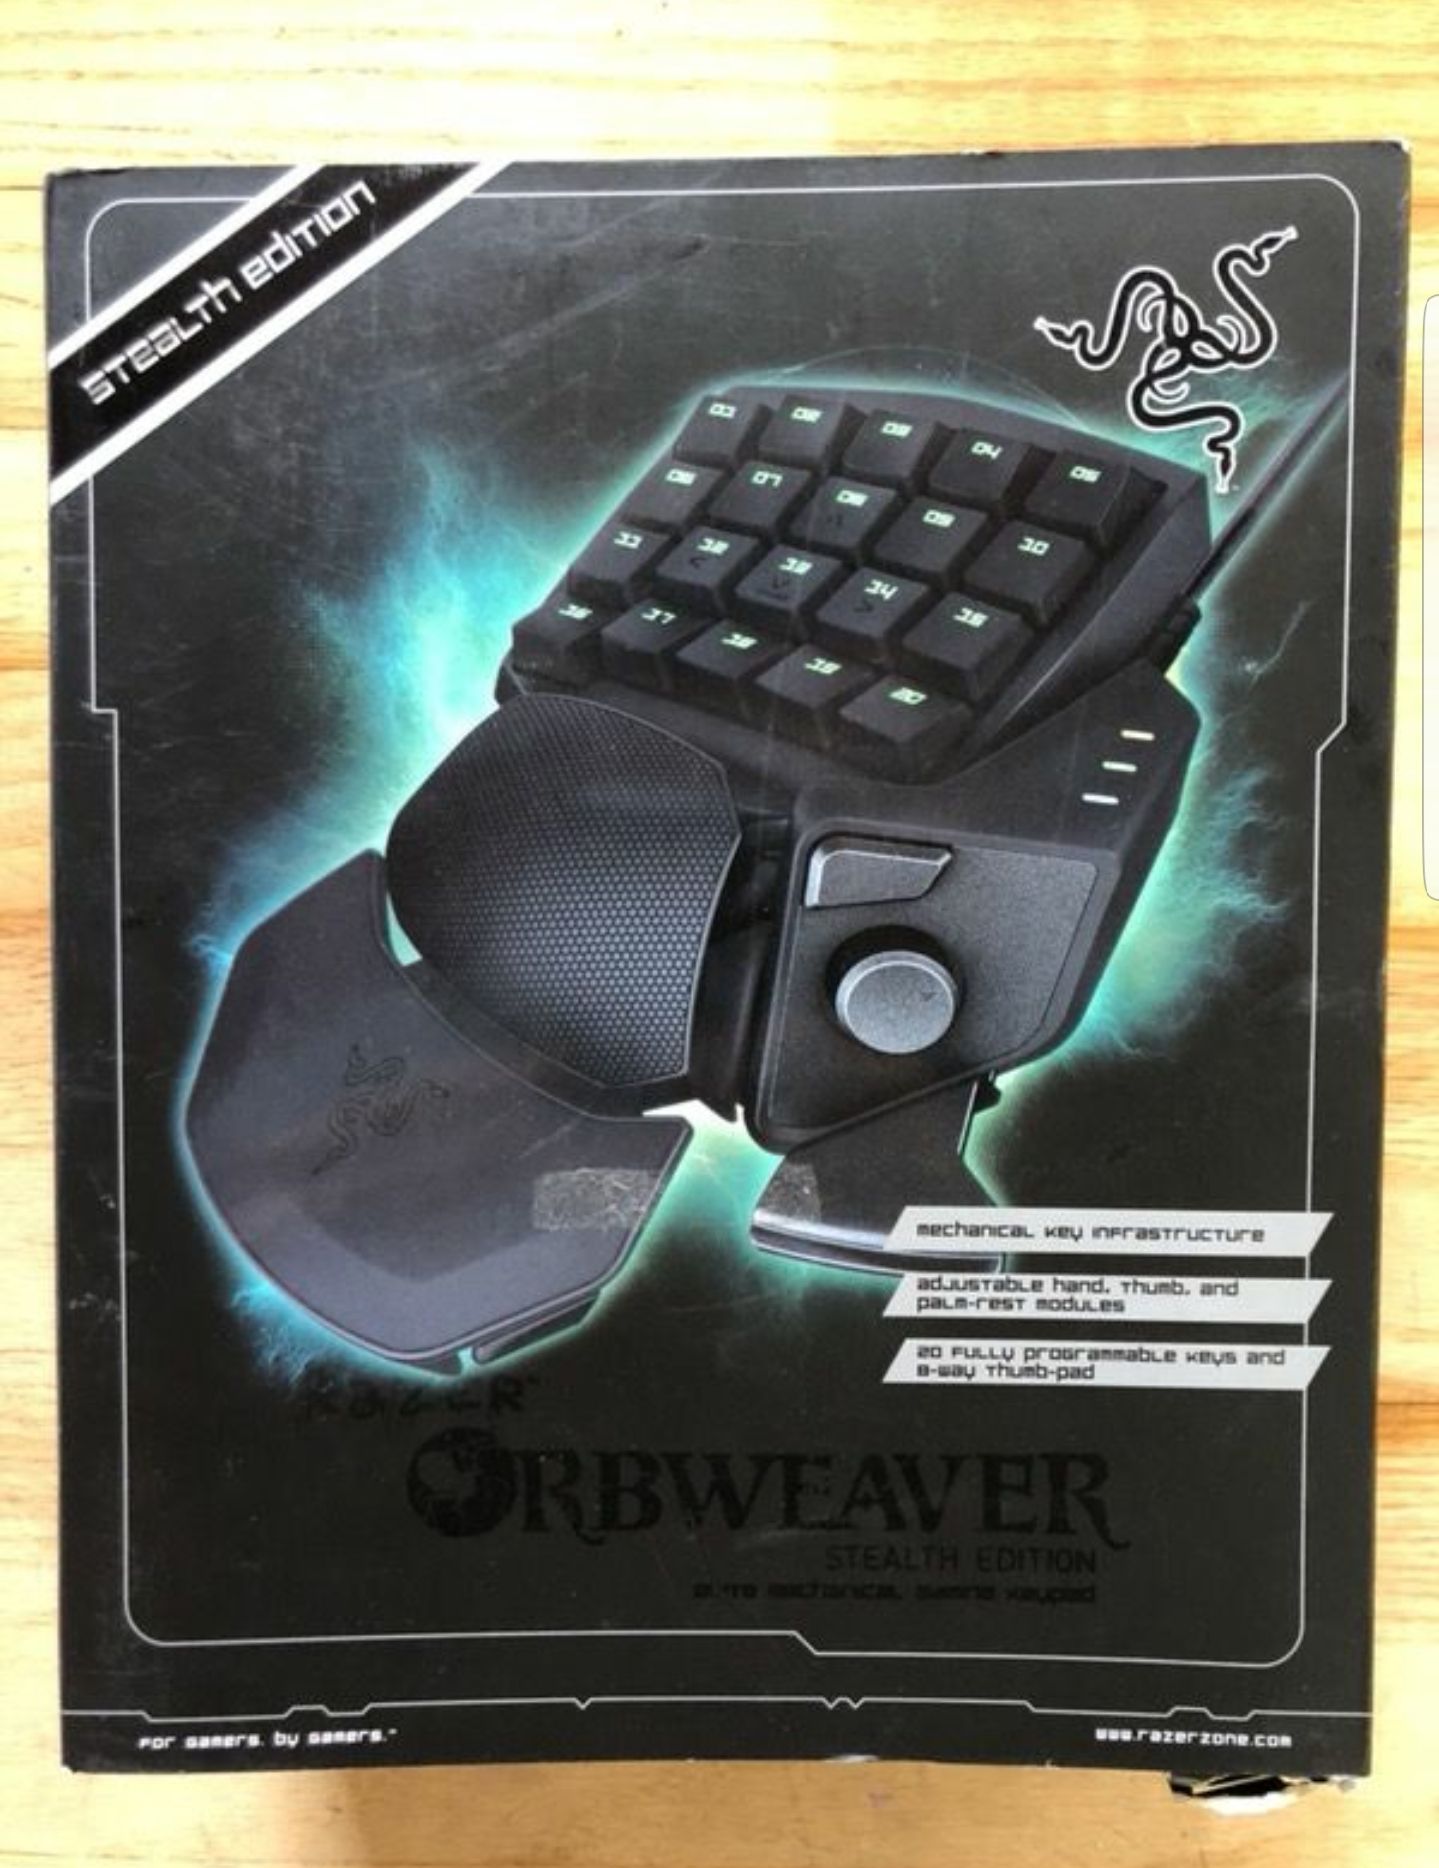 Razer Orbweaver Stealth Edition Gaming Keypad